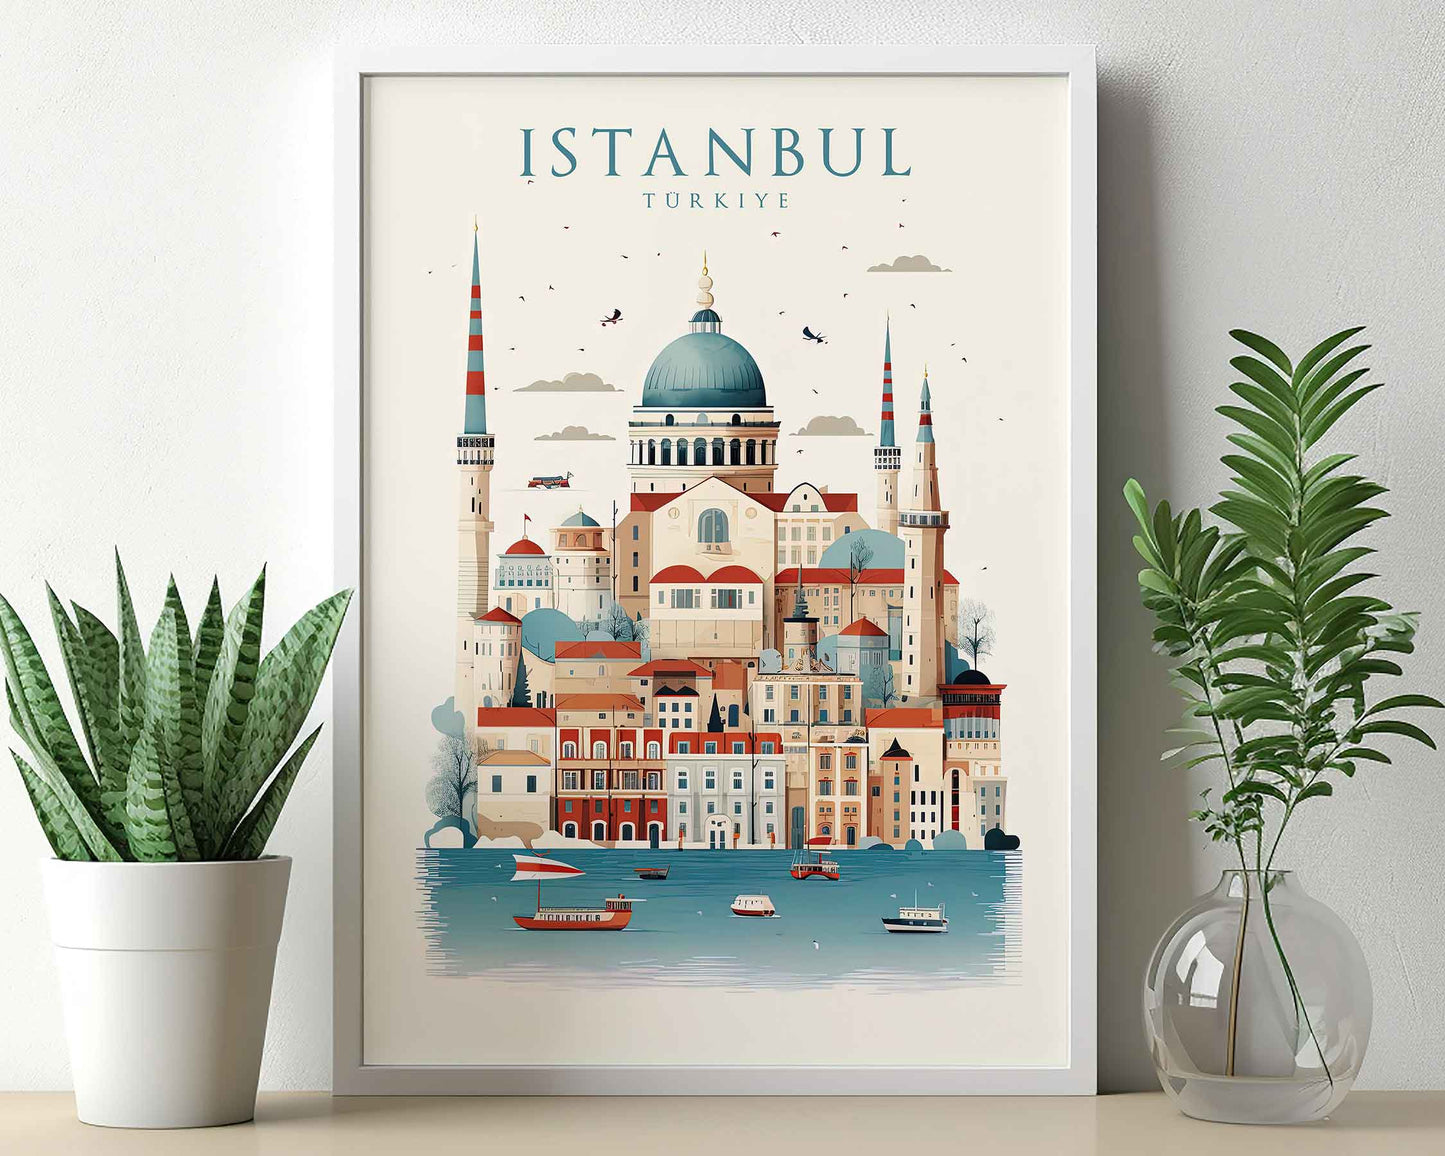 Framed Image of Istanbul Turkey Travel Poster Illustration Prints Wall Art